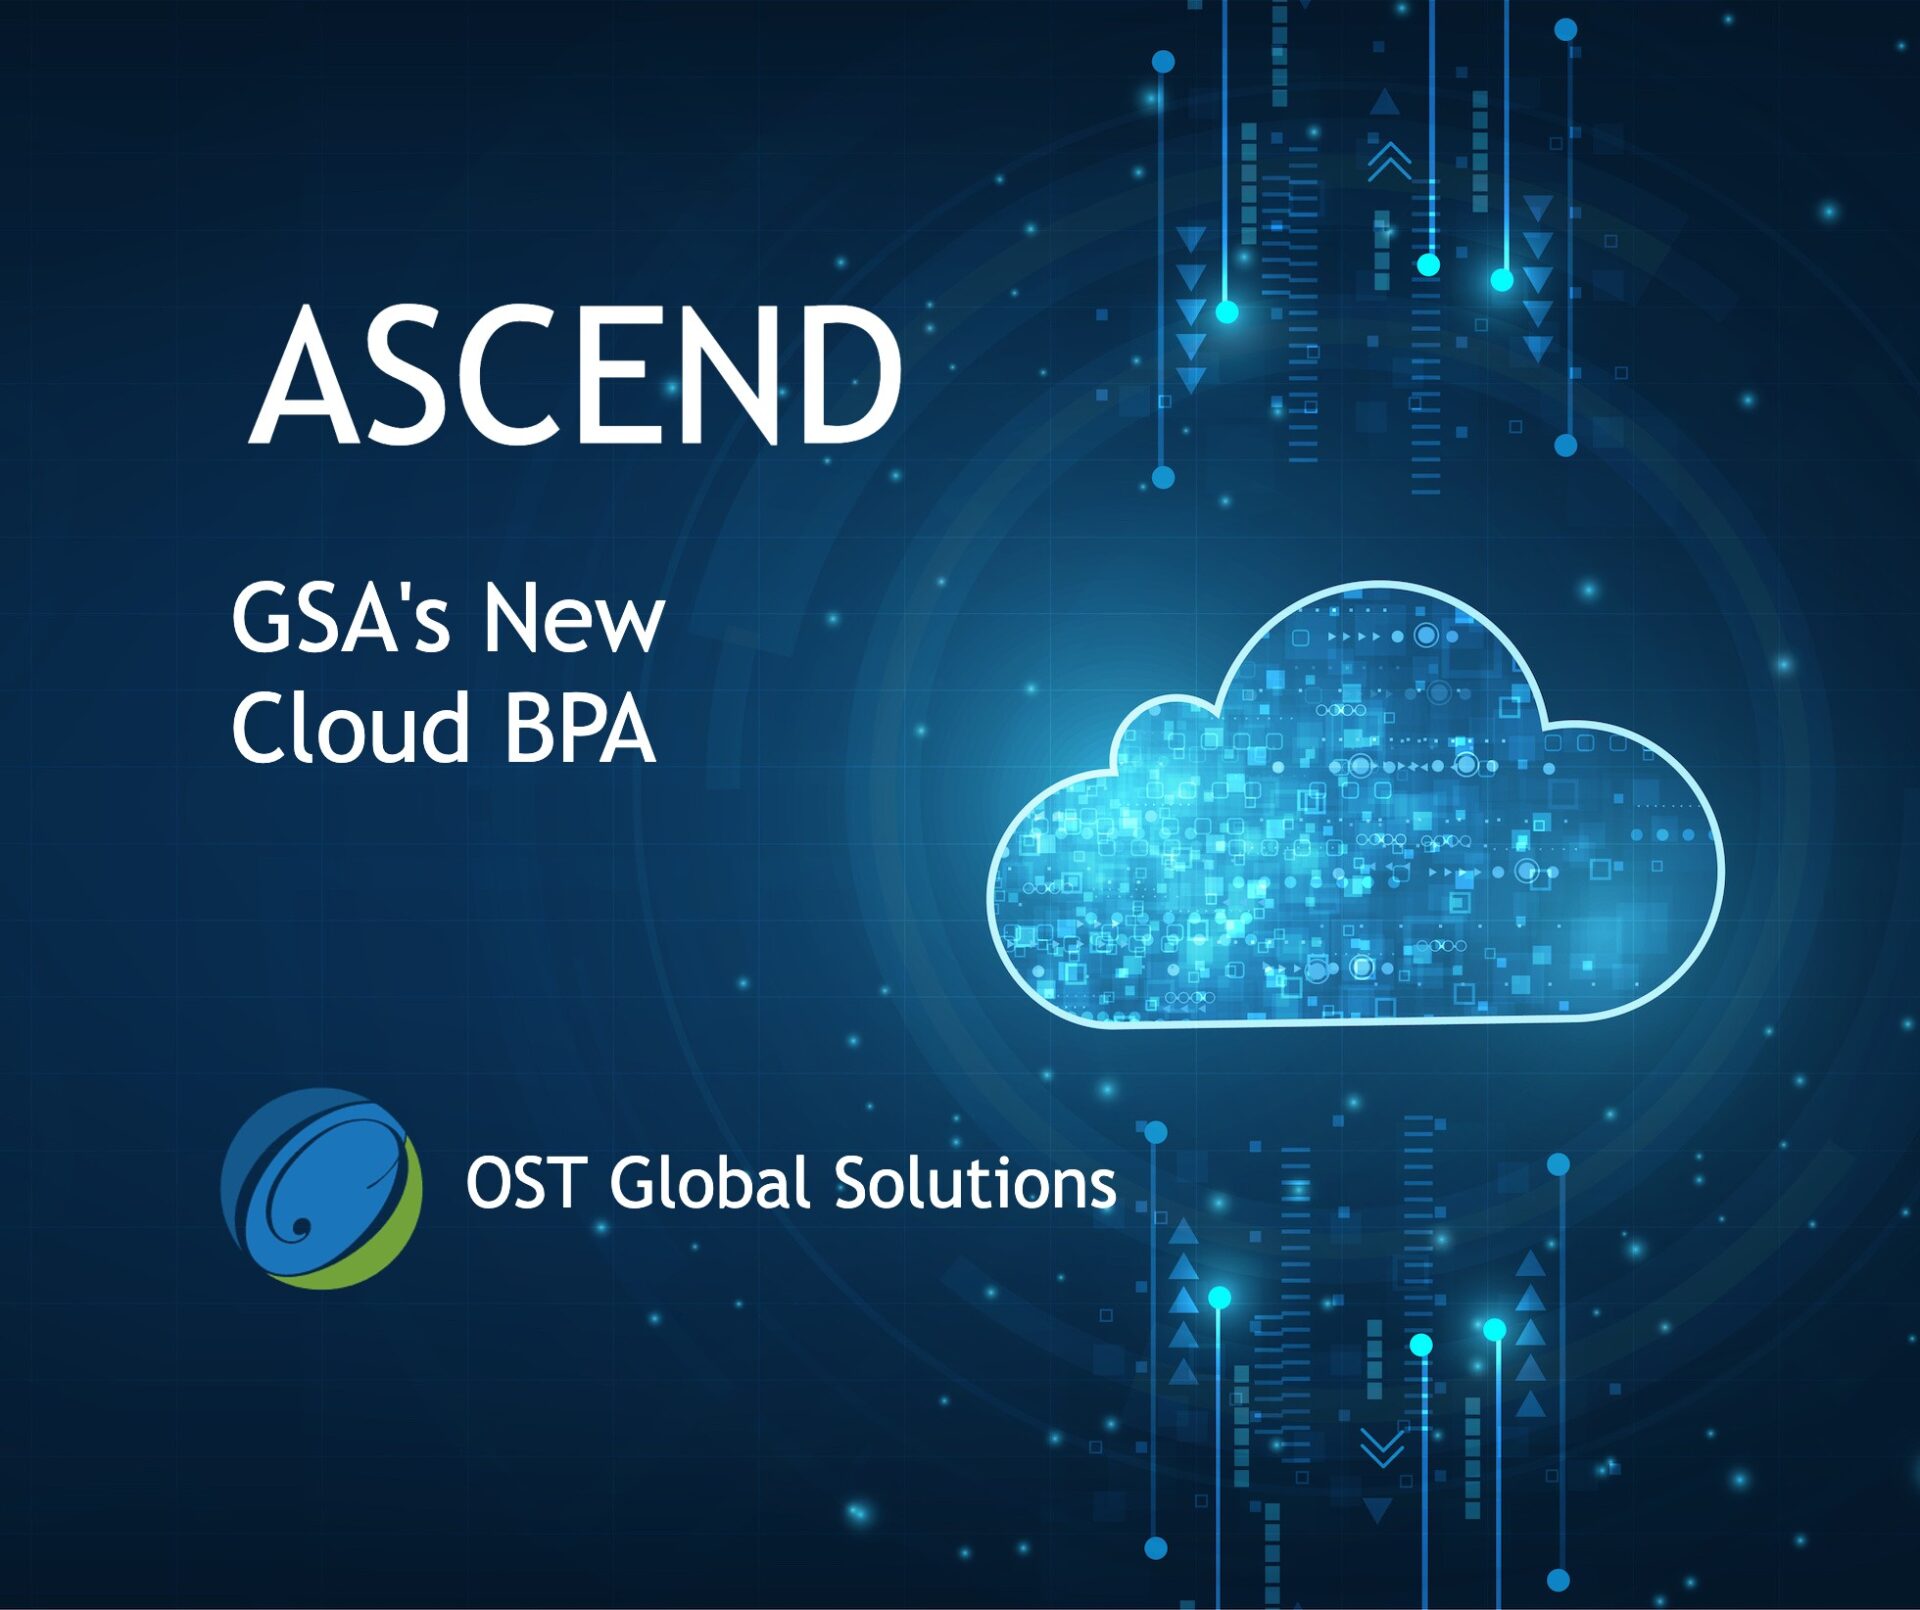 Ascend-GSAs-New-Cloud-BPA-Featured-Image